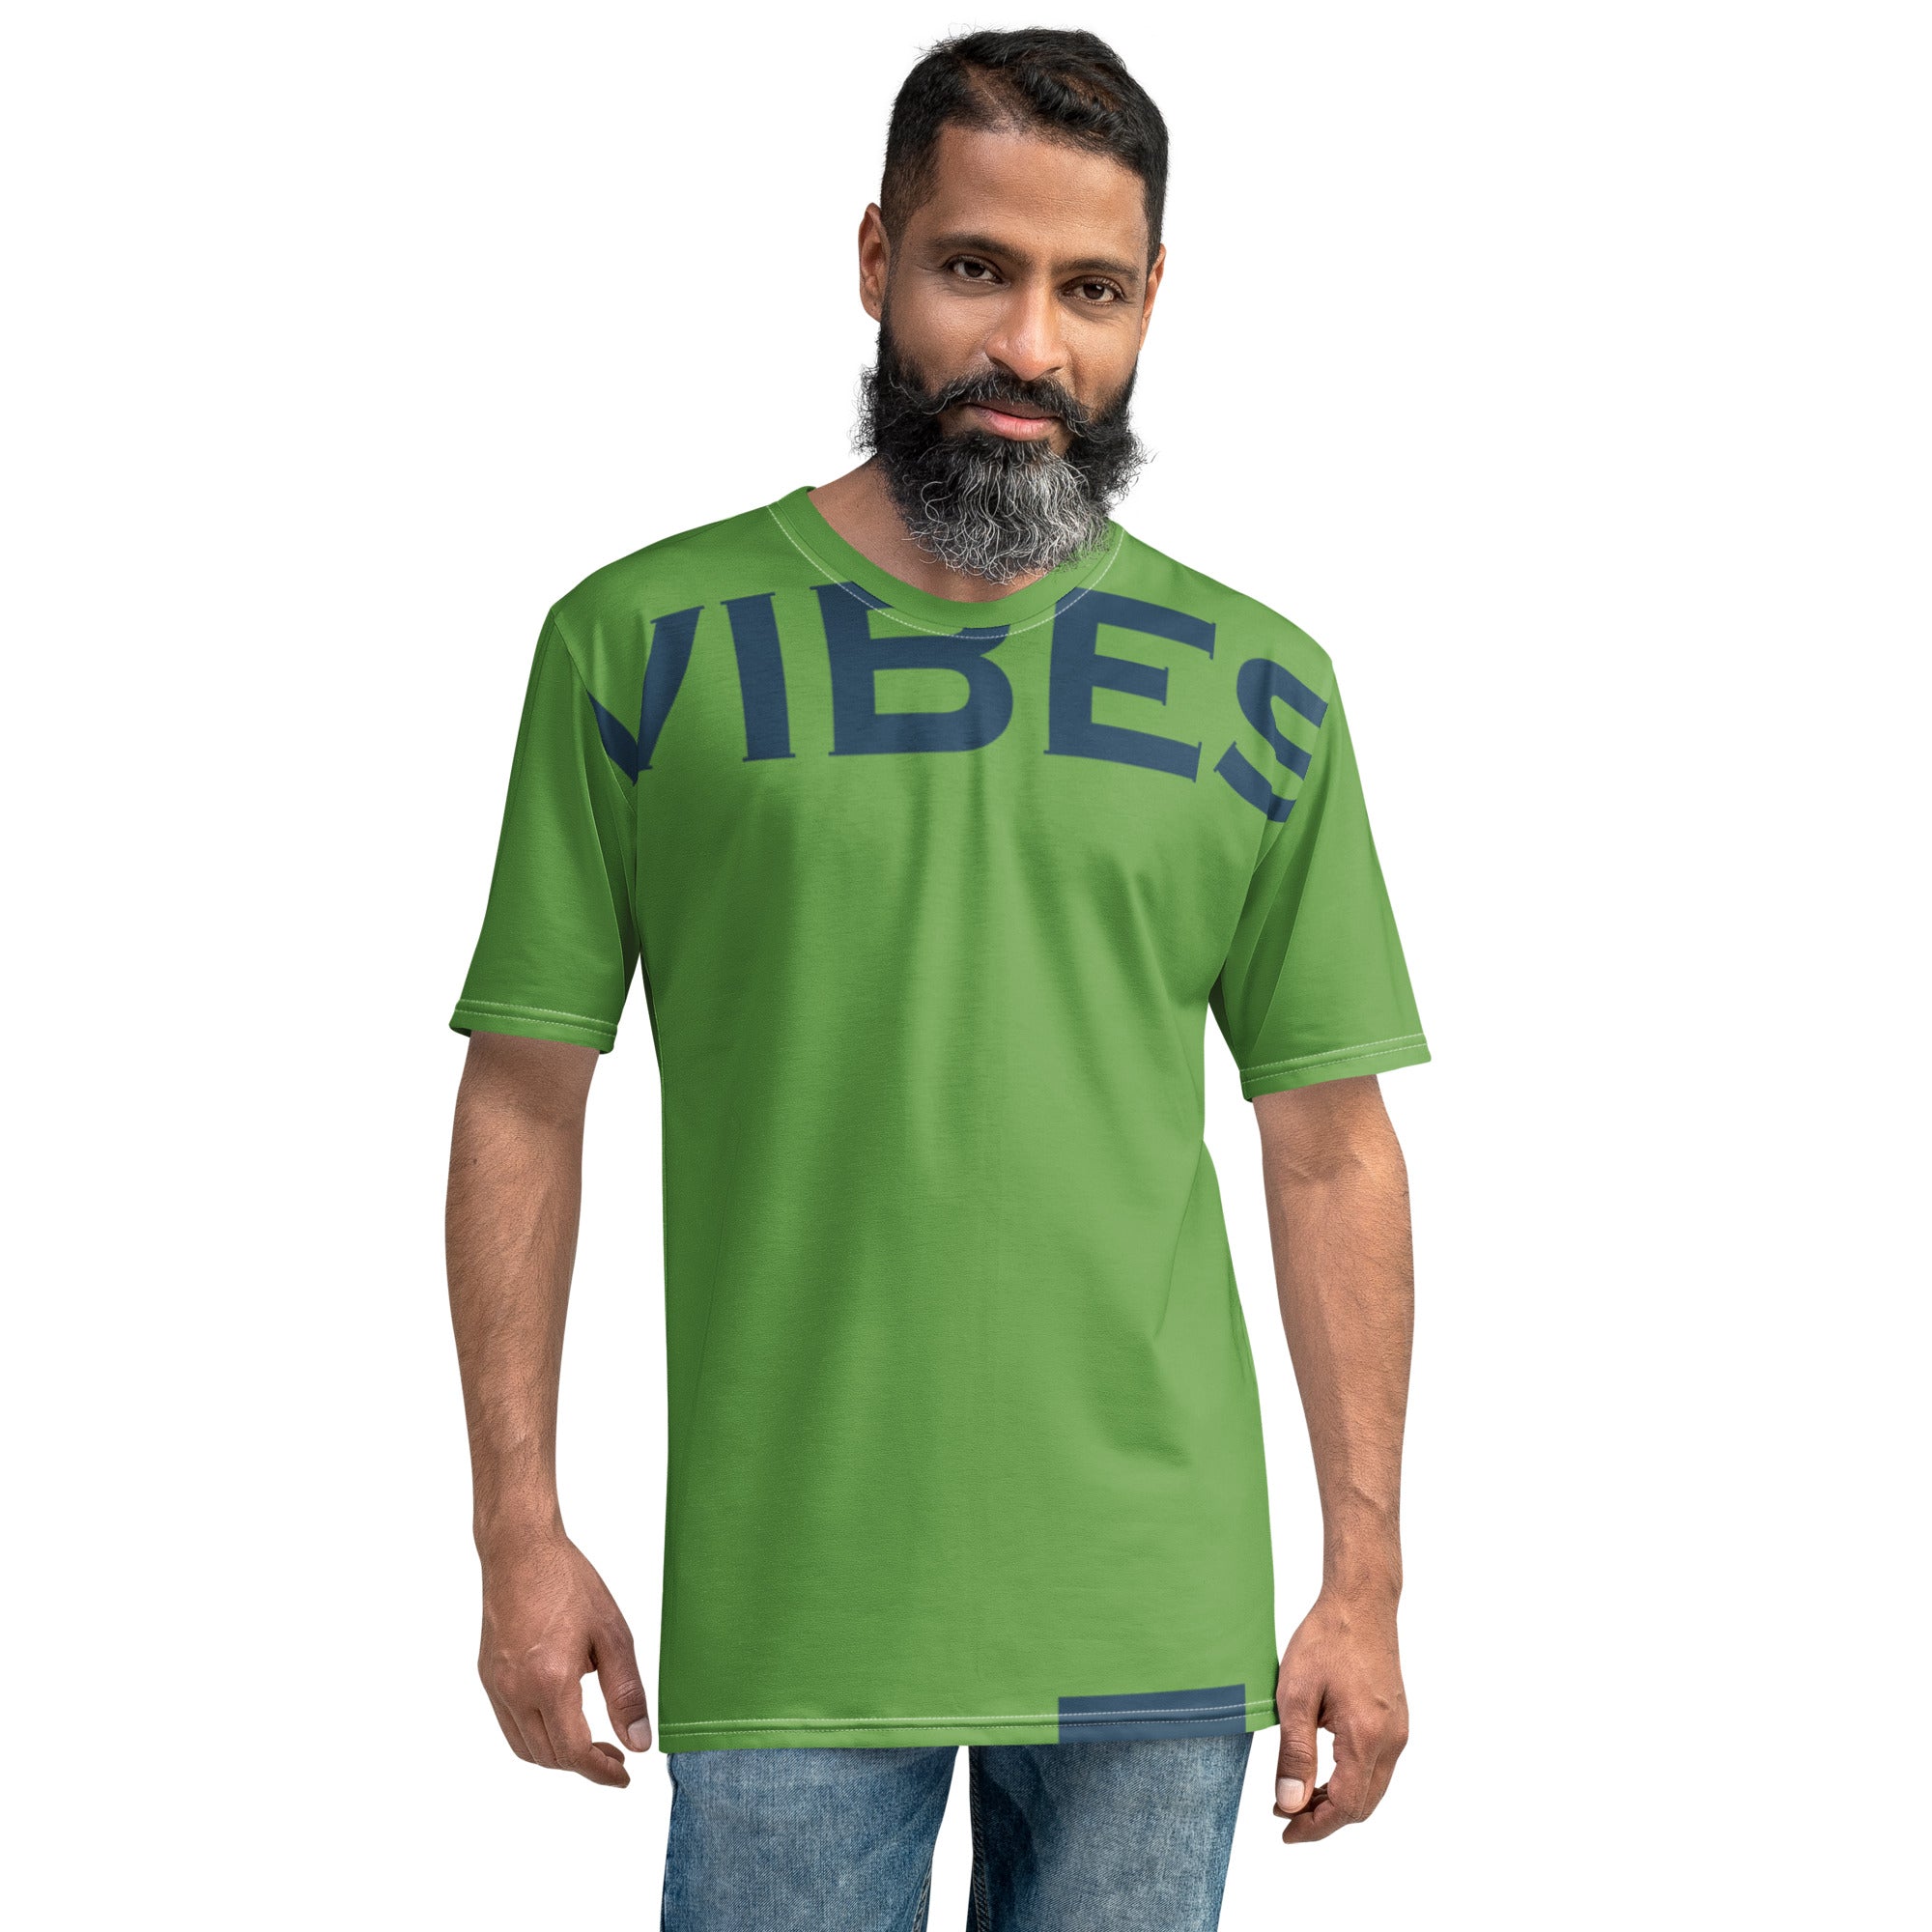 TIME OF VIBES TOV Herren Premium T-Shirt VIBES (Grün/Blau) - €49,00